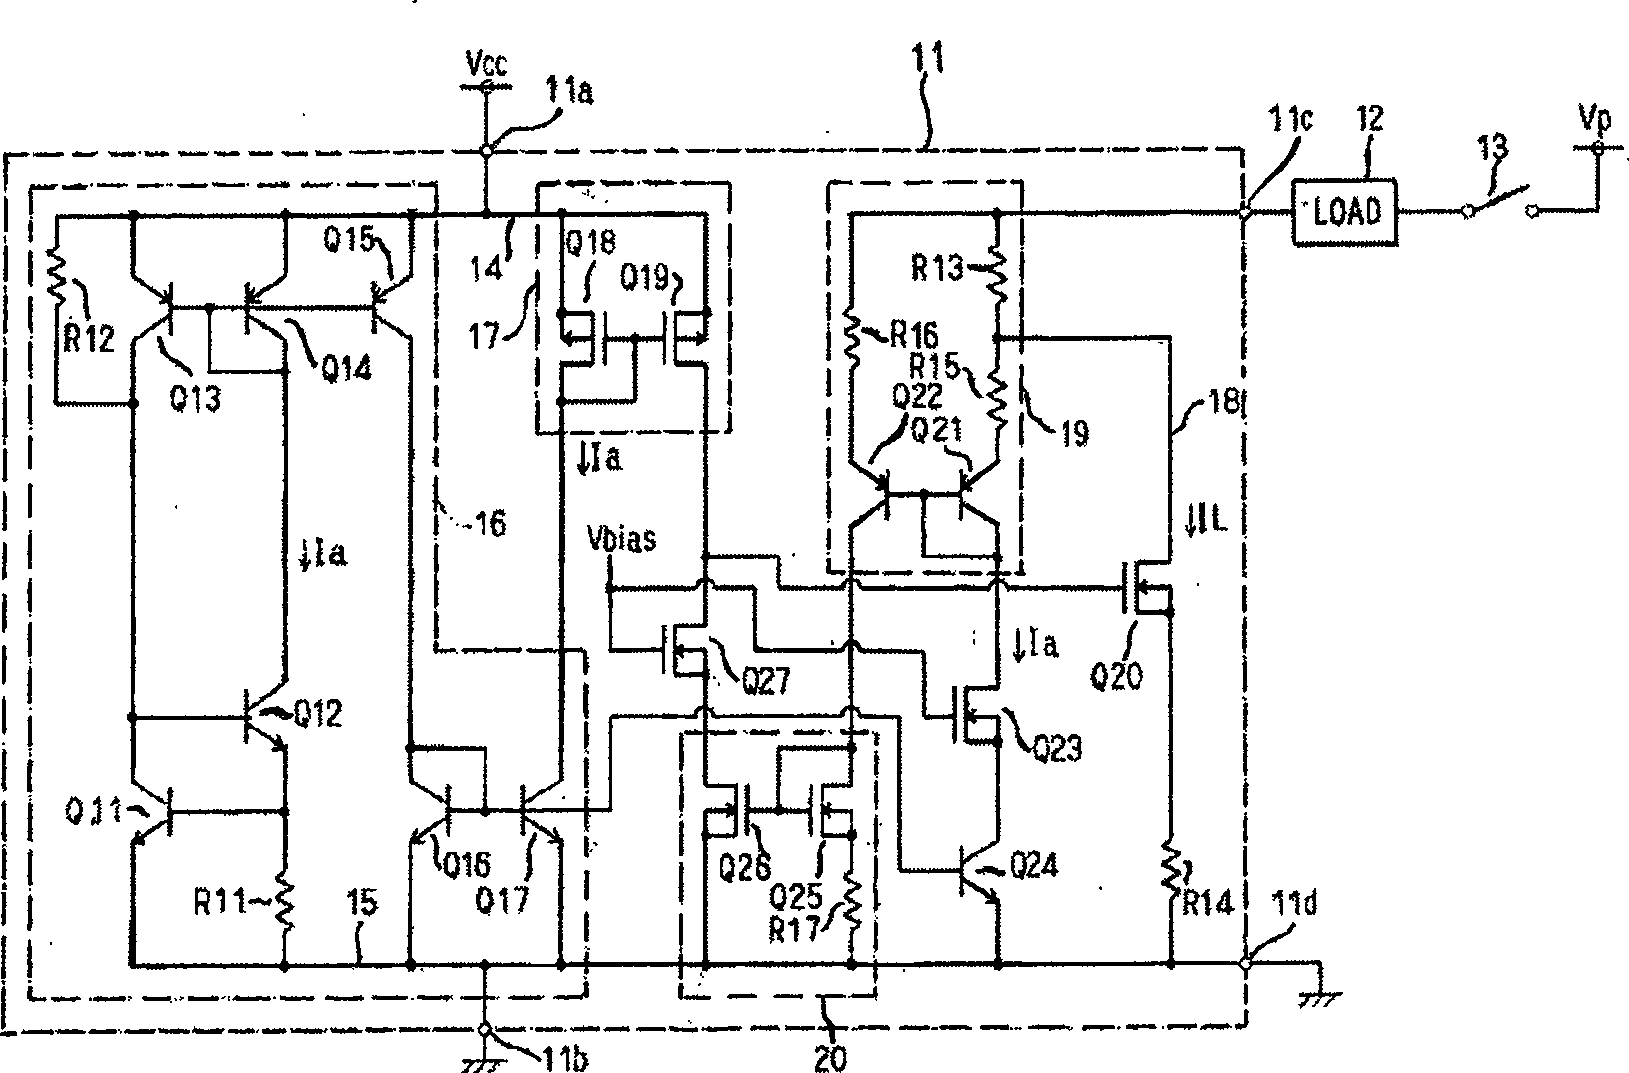 Constant current source control circuit